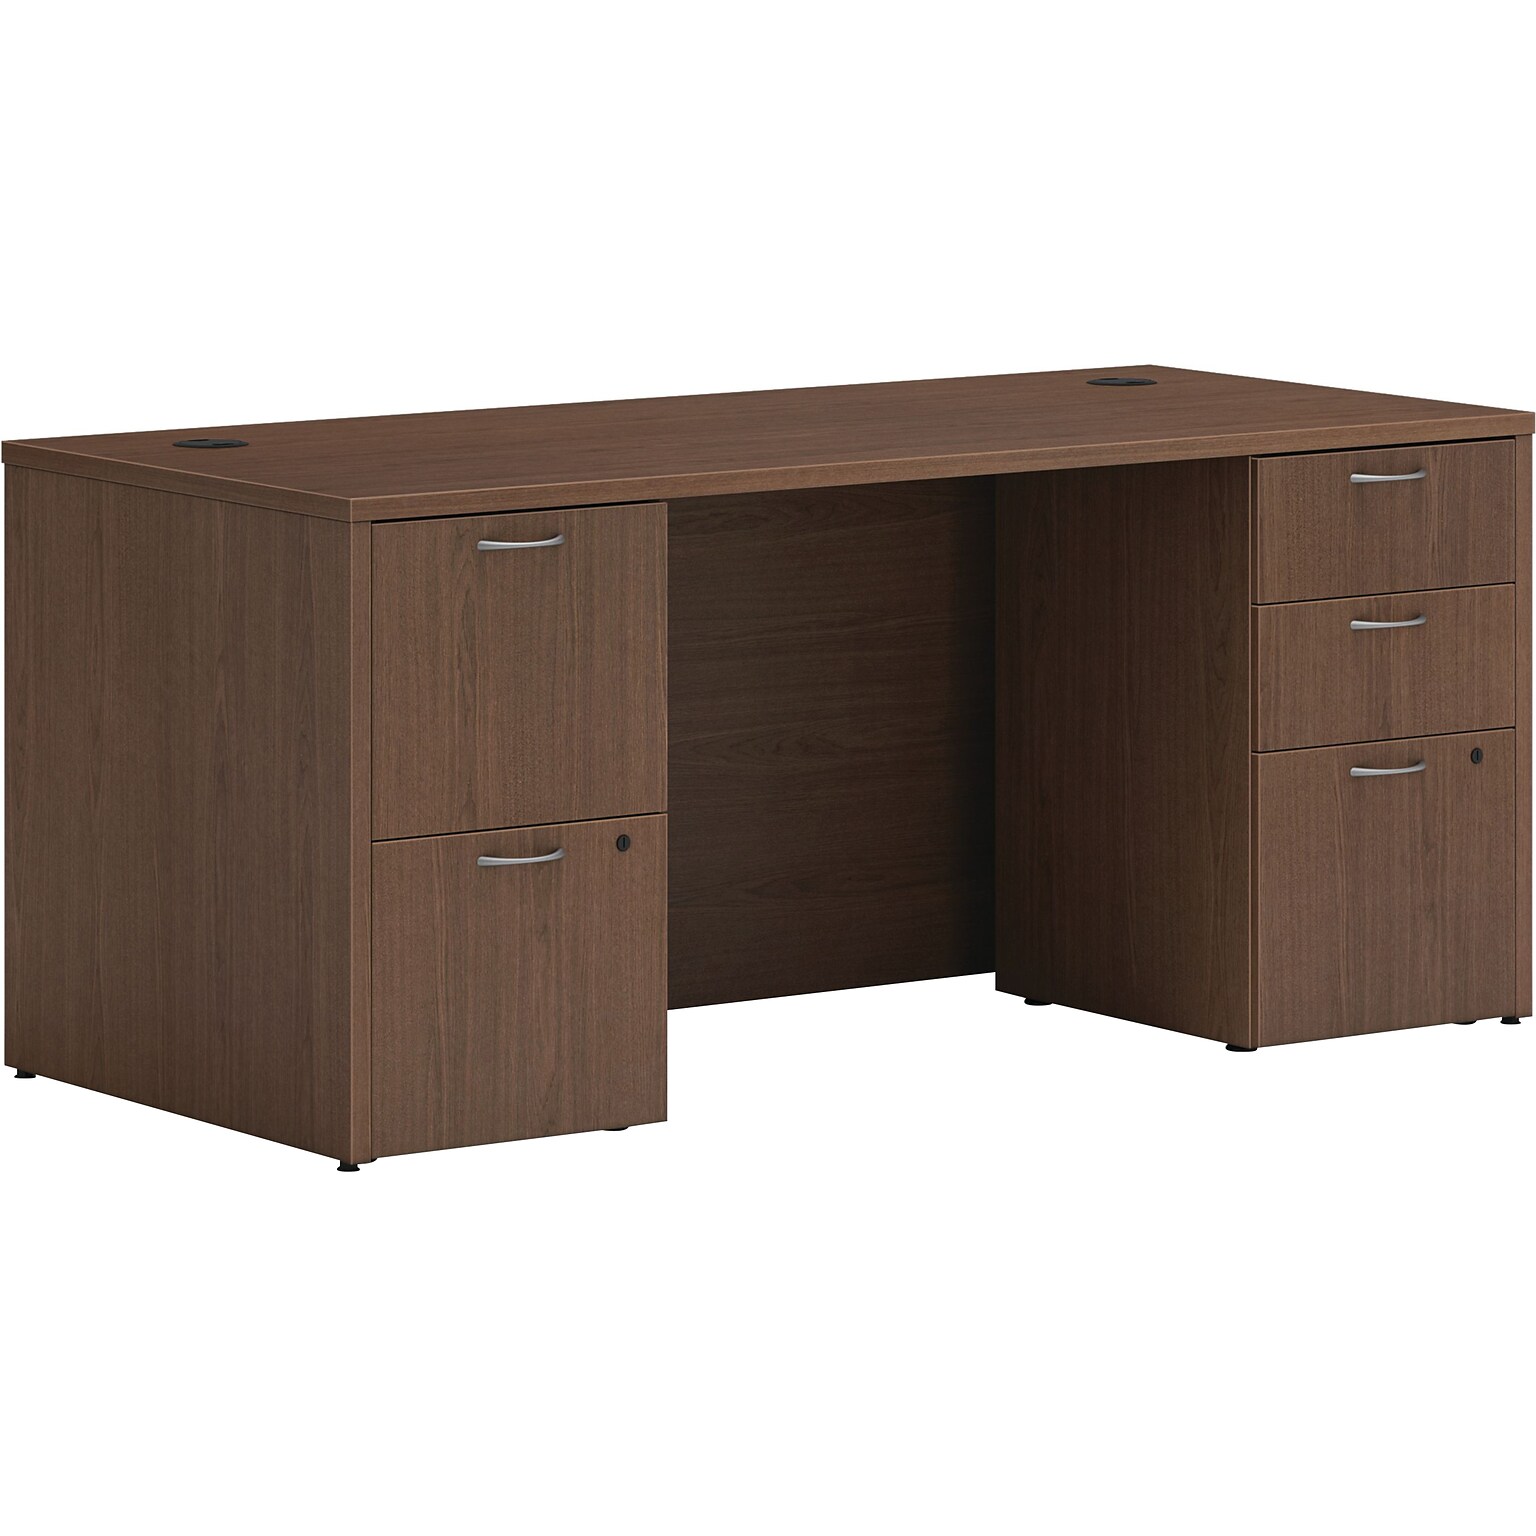 HON Mod 66W Double-Pedestal Desk, Sepia Walnut (HLPLDS66PSSE1)